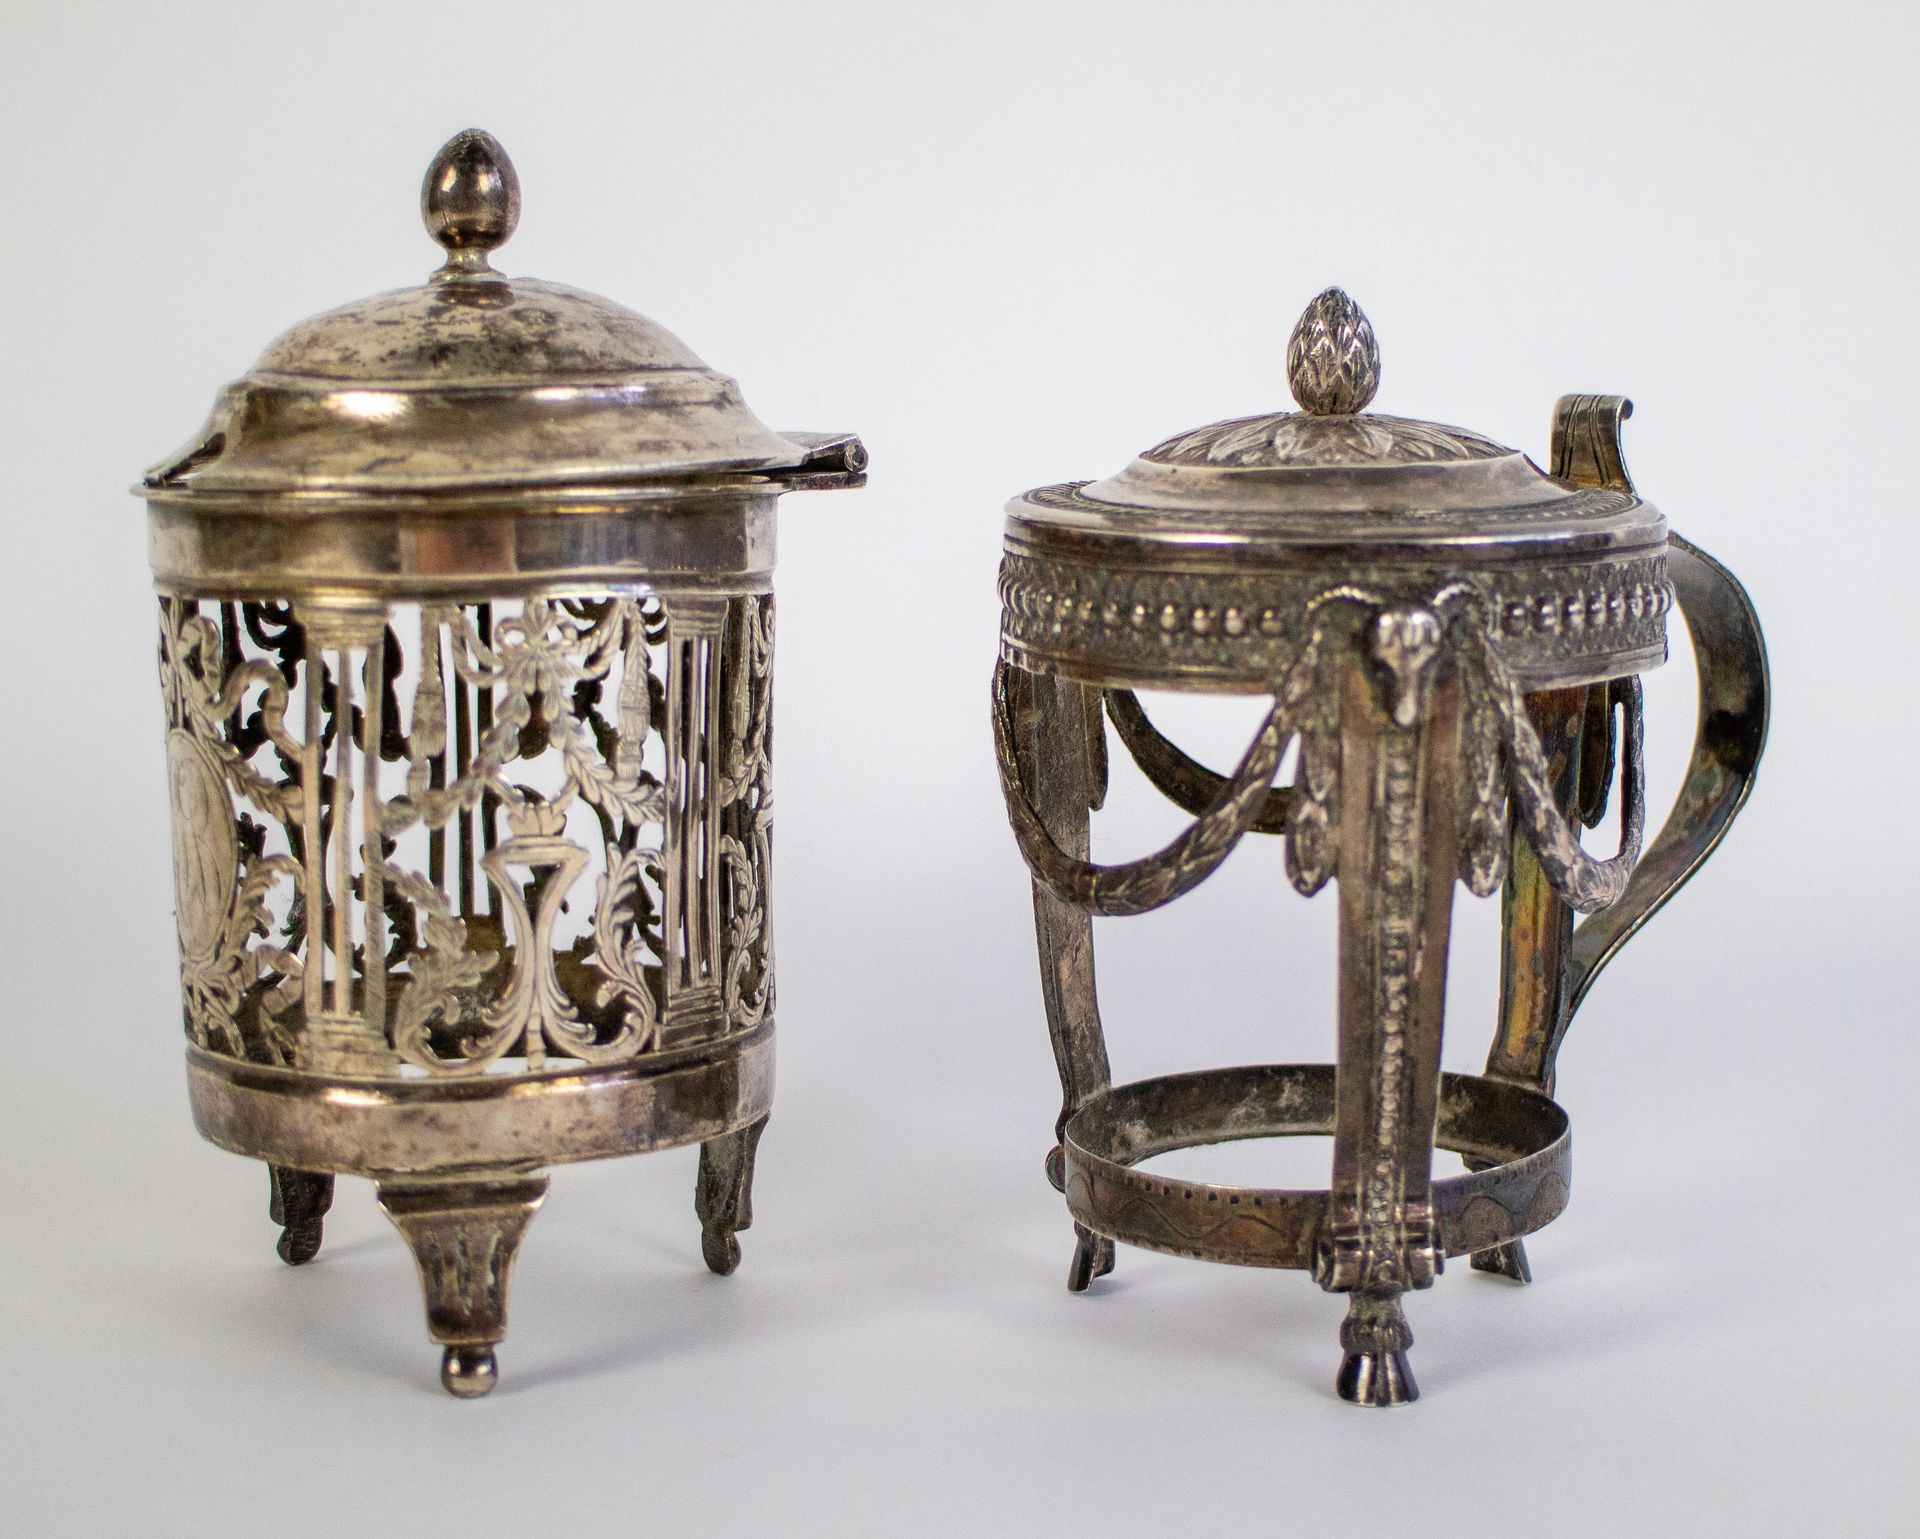 2 silver mustard jars 无玻璃，其中一个日期为1792年。一批2个不含玻璃的罐子。
高10-11厘米。